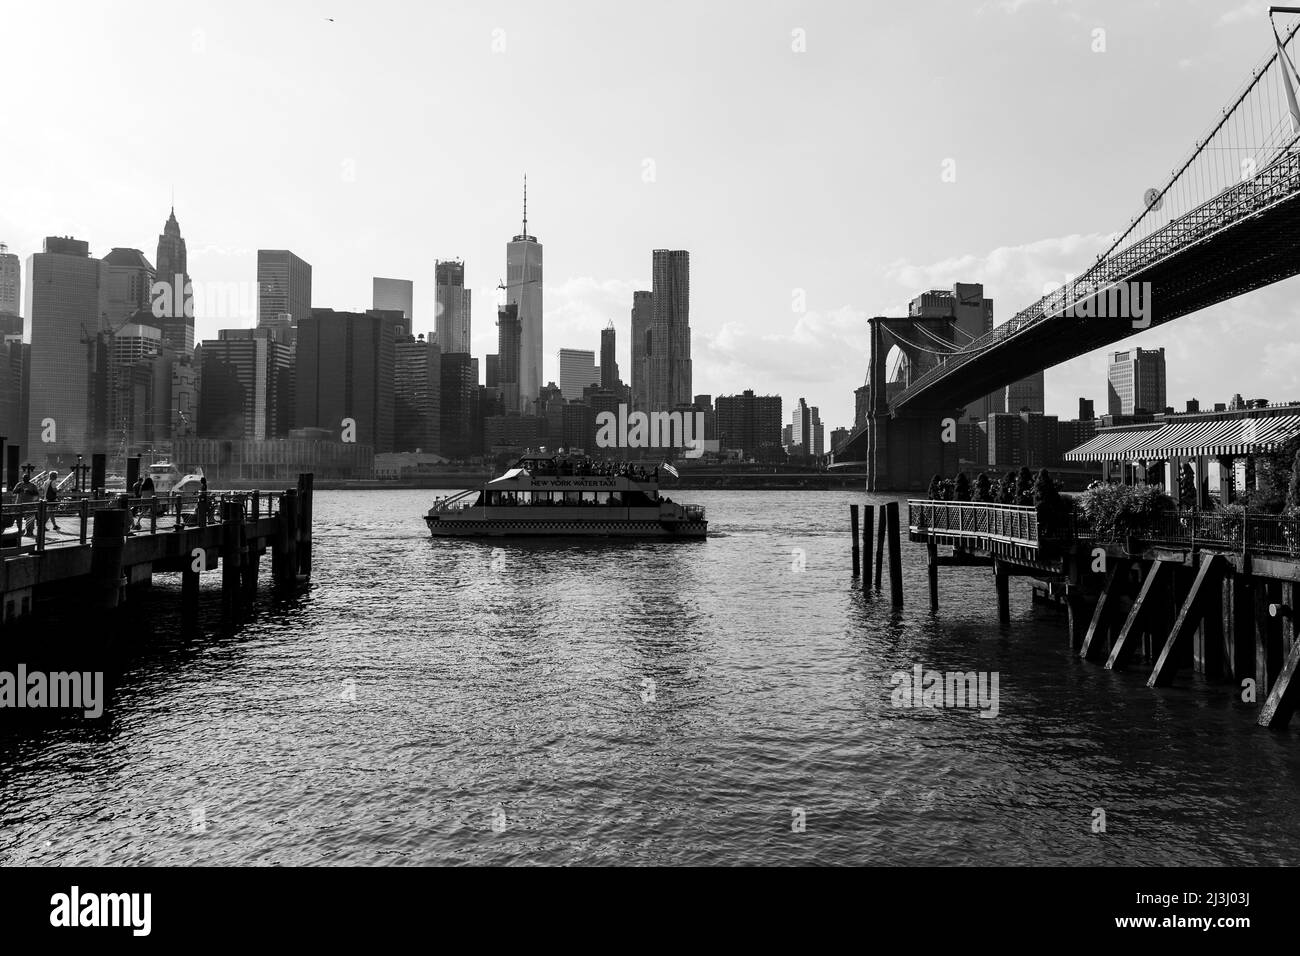 Brooklyn Heights, New York City, NY, États-Unis, le New York Watertaxi et le pont de Brooklyn sur East River Banque D'Images